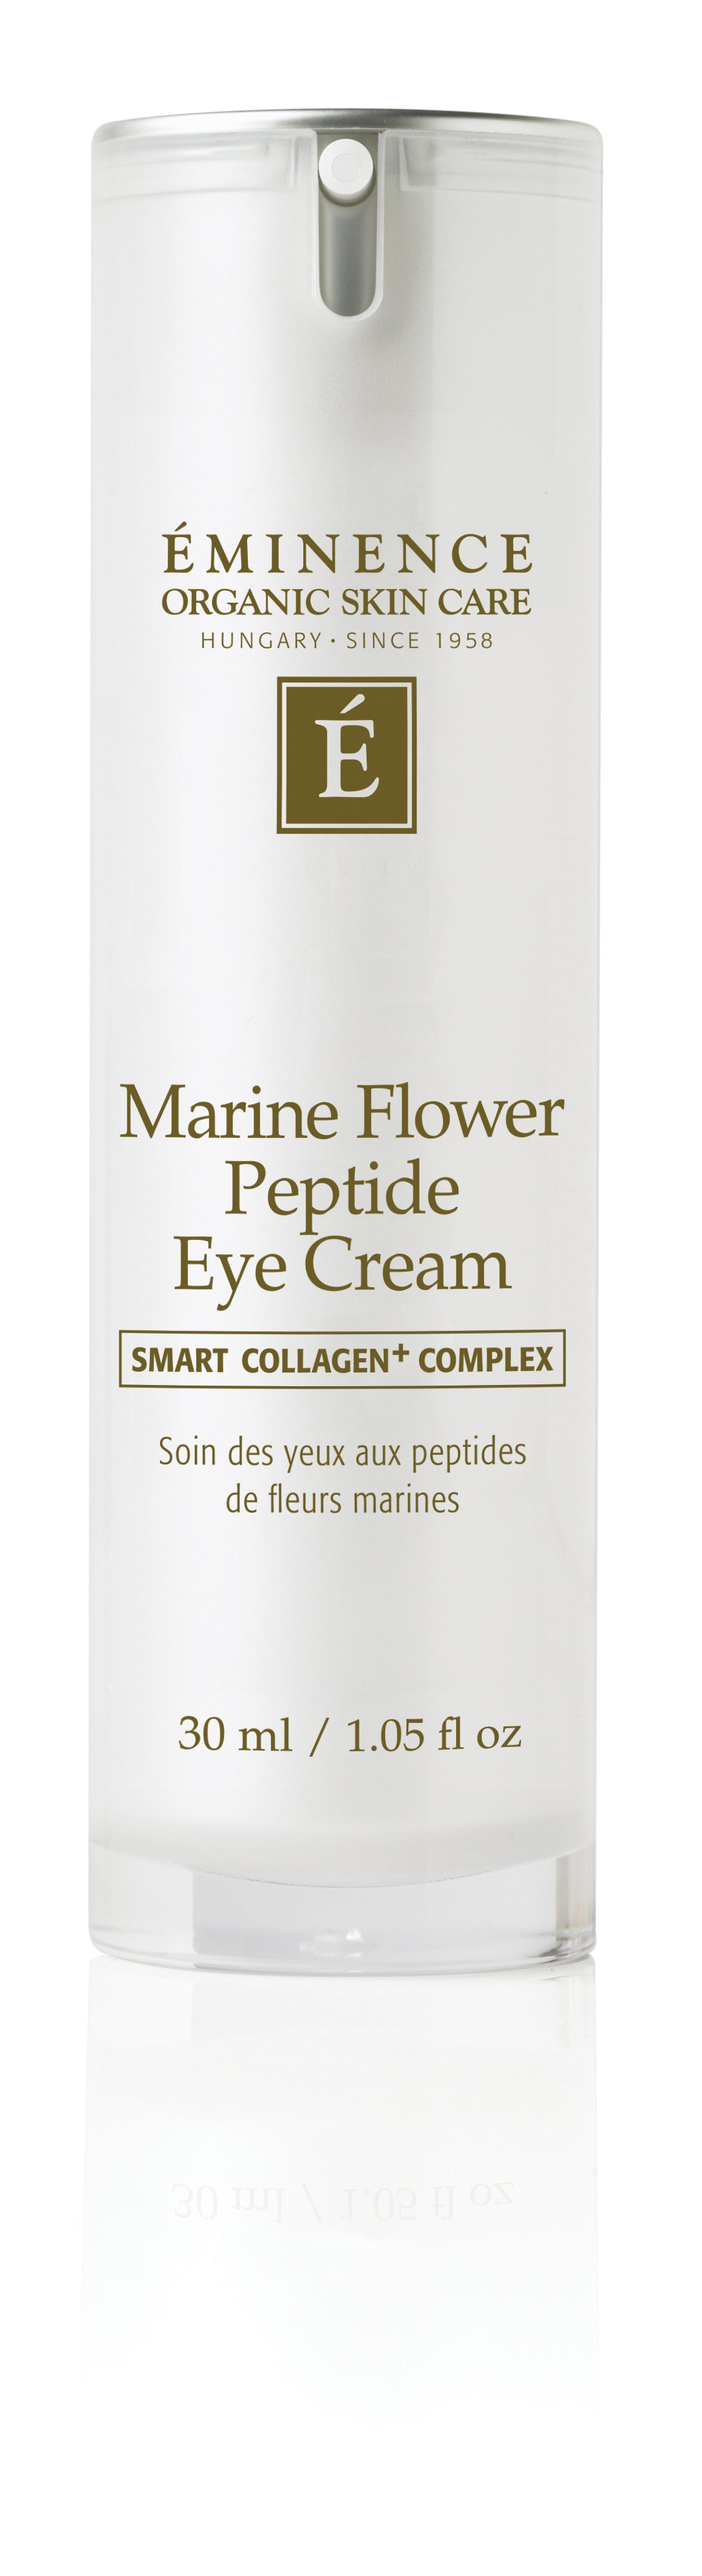 Marine Flower Peptide Eye Cream:1.05oz